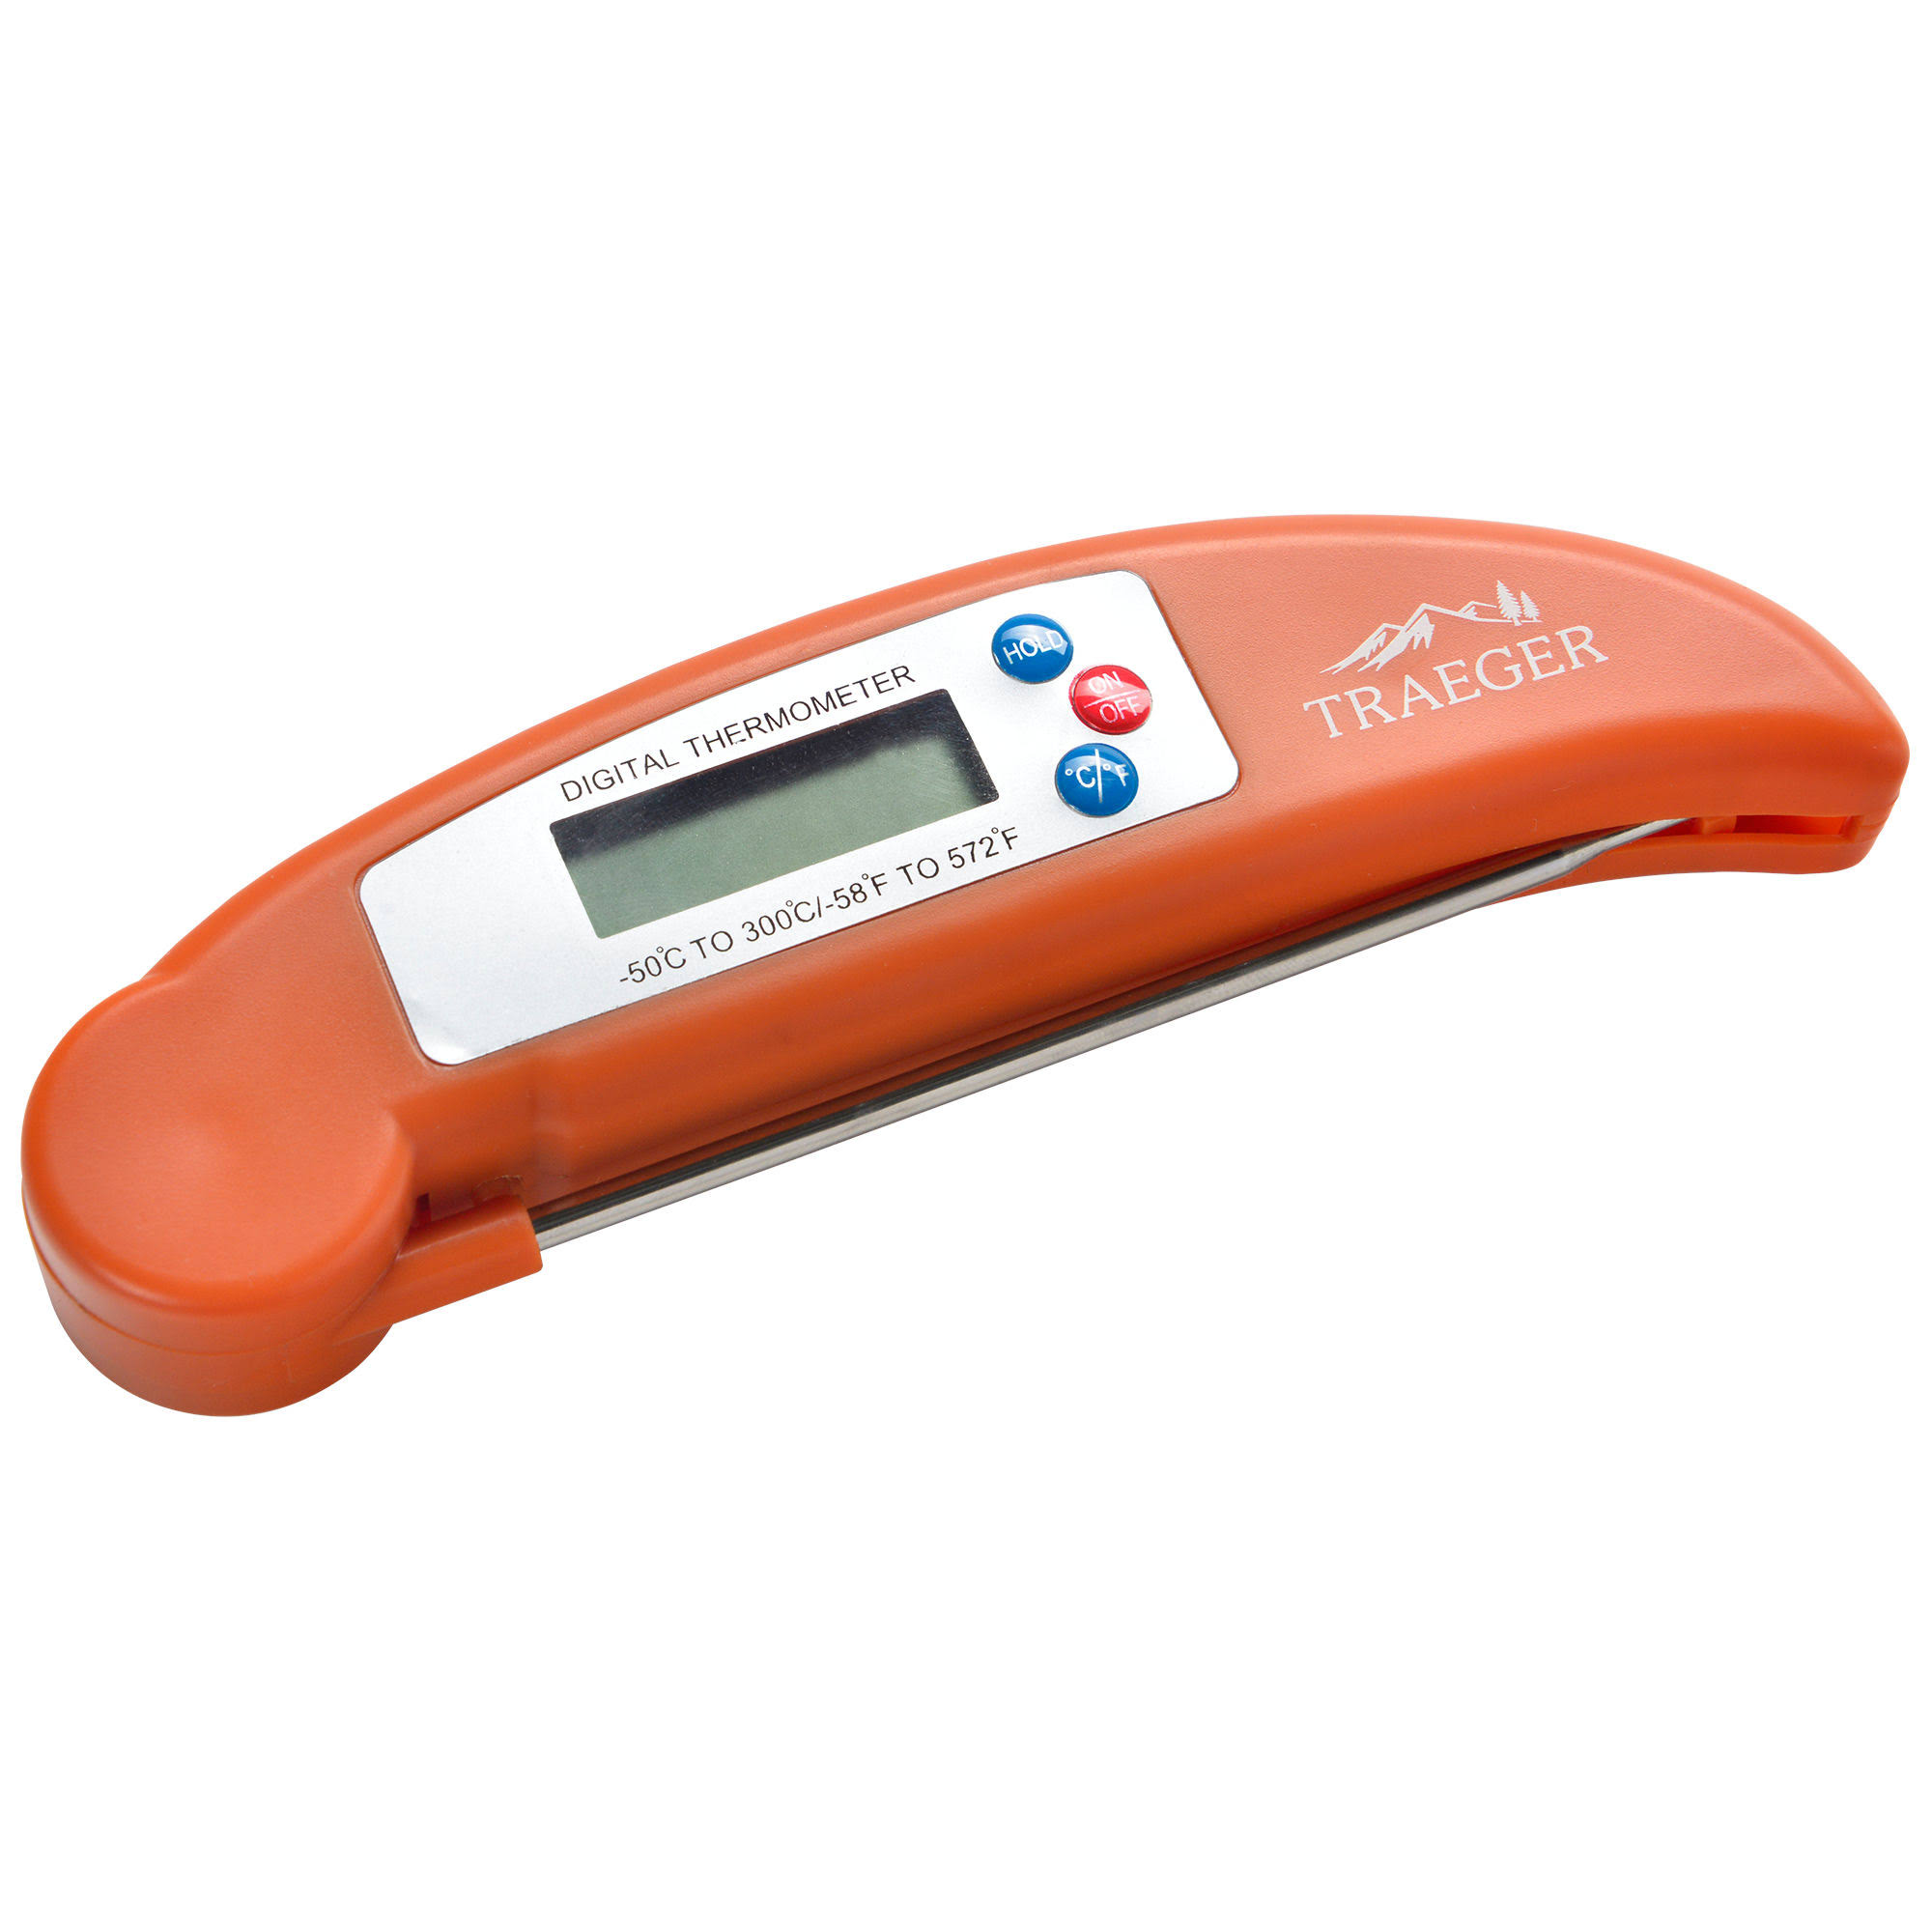 Traeger Digital Grill Thermometer - Orange